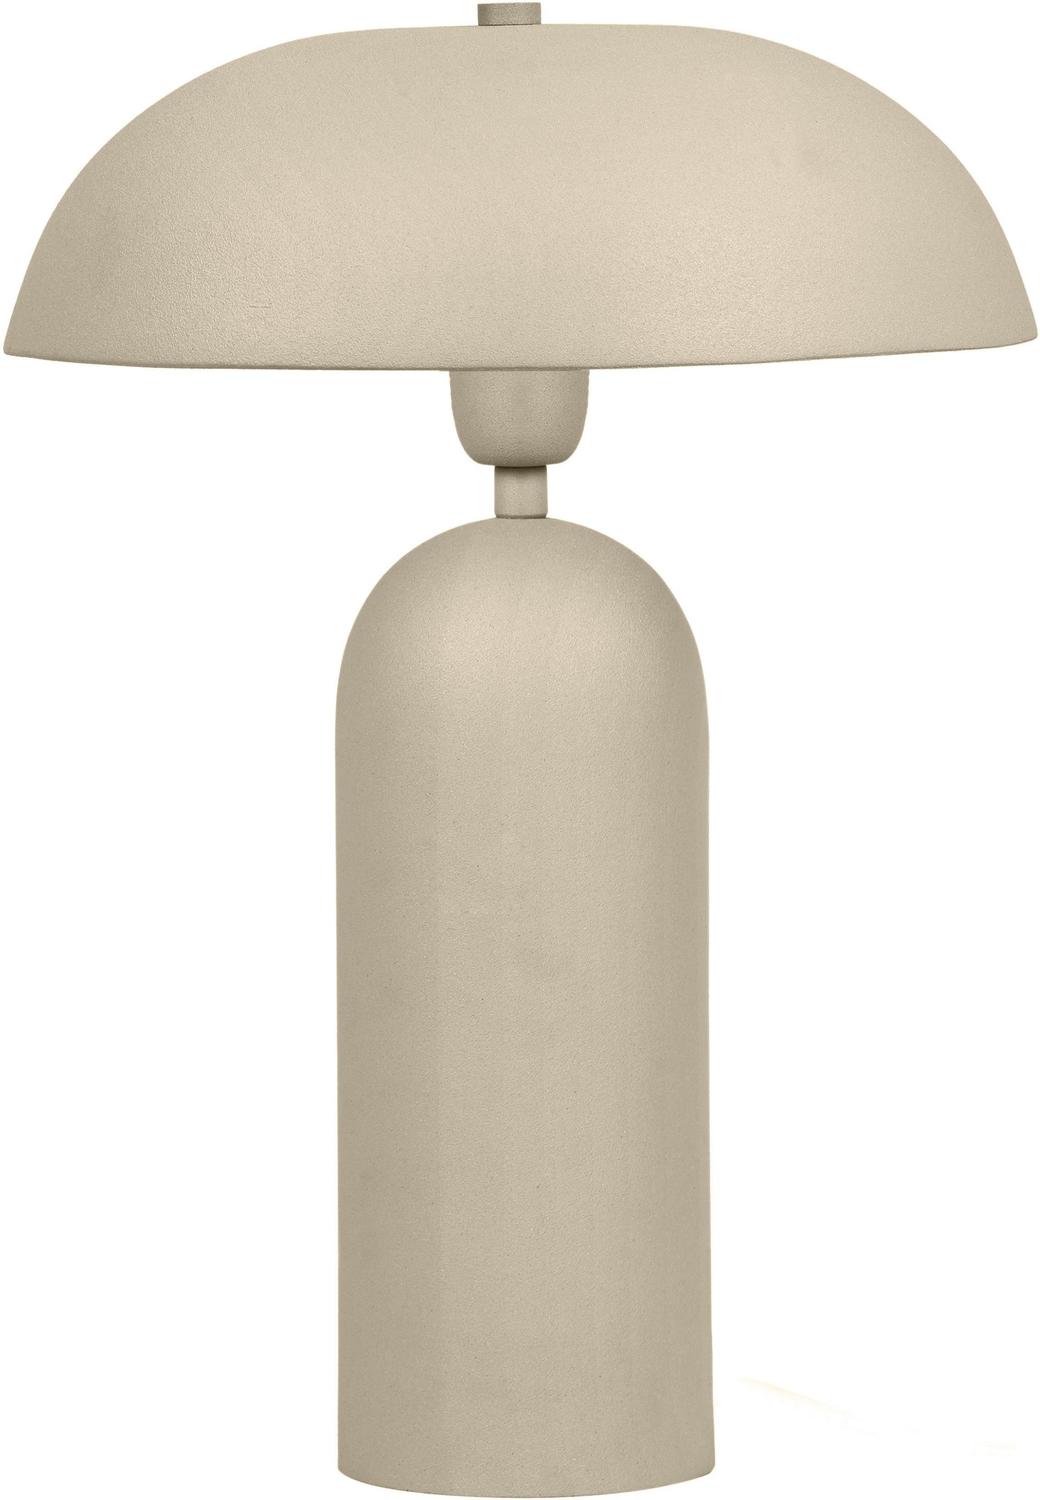 tray coffee Contemporary Design Furniture Table Lamps Cream